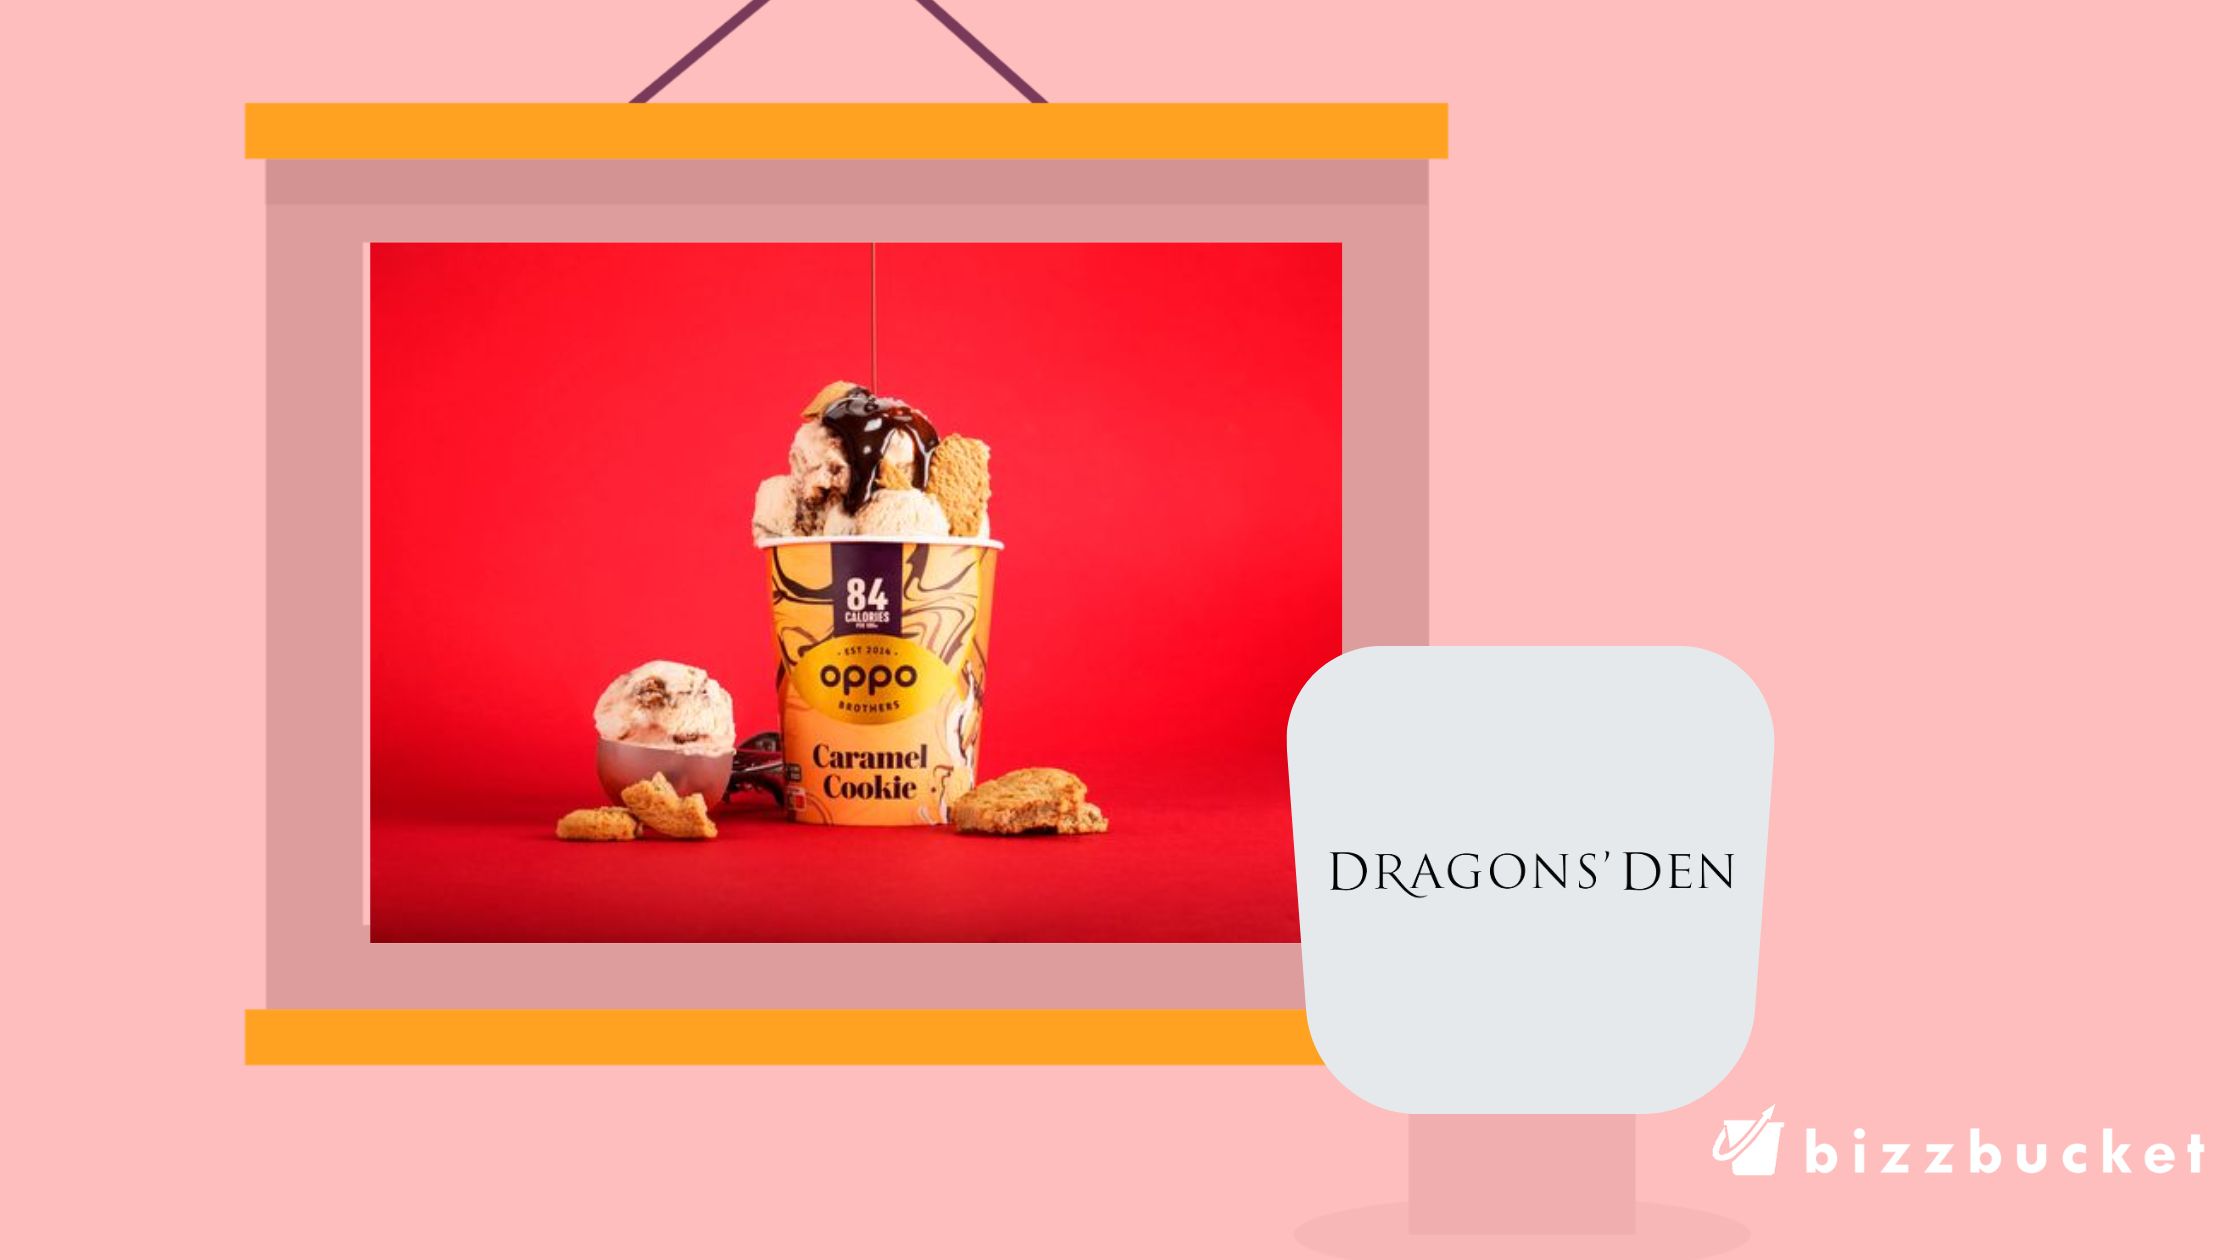 Oppo Ice Cream Dragons’ Den Update